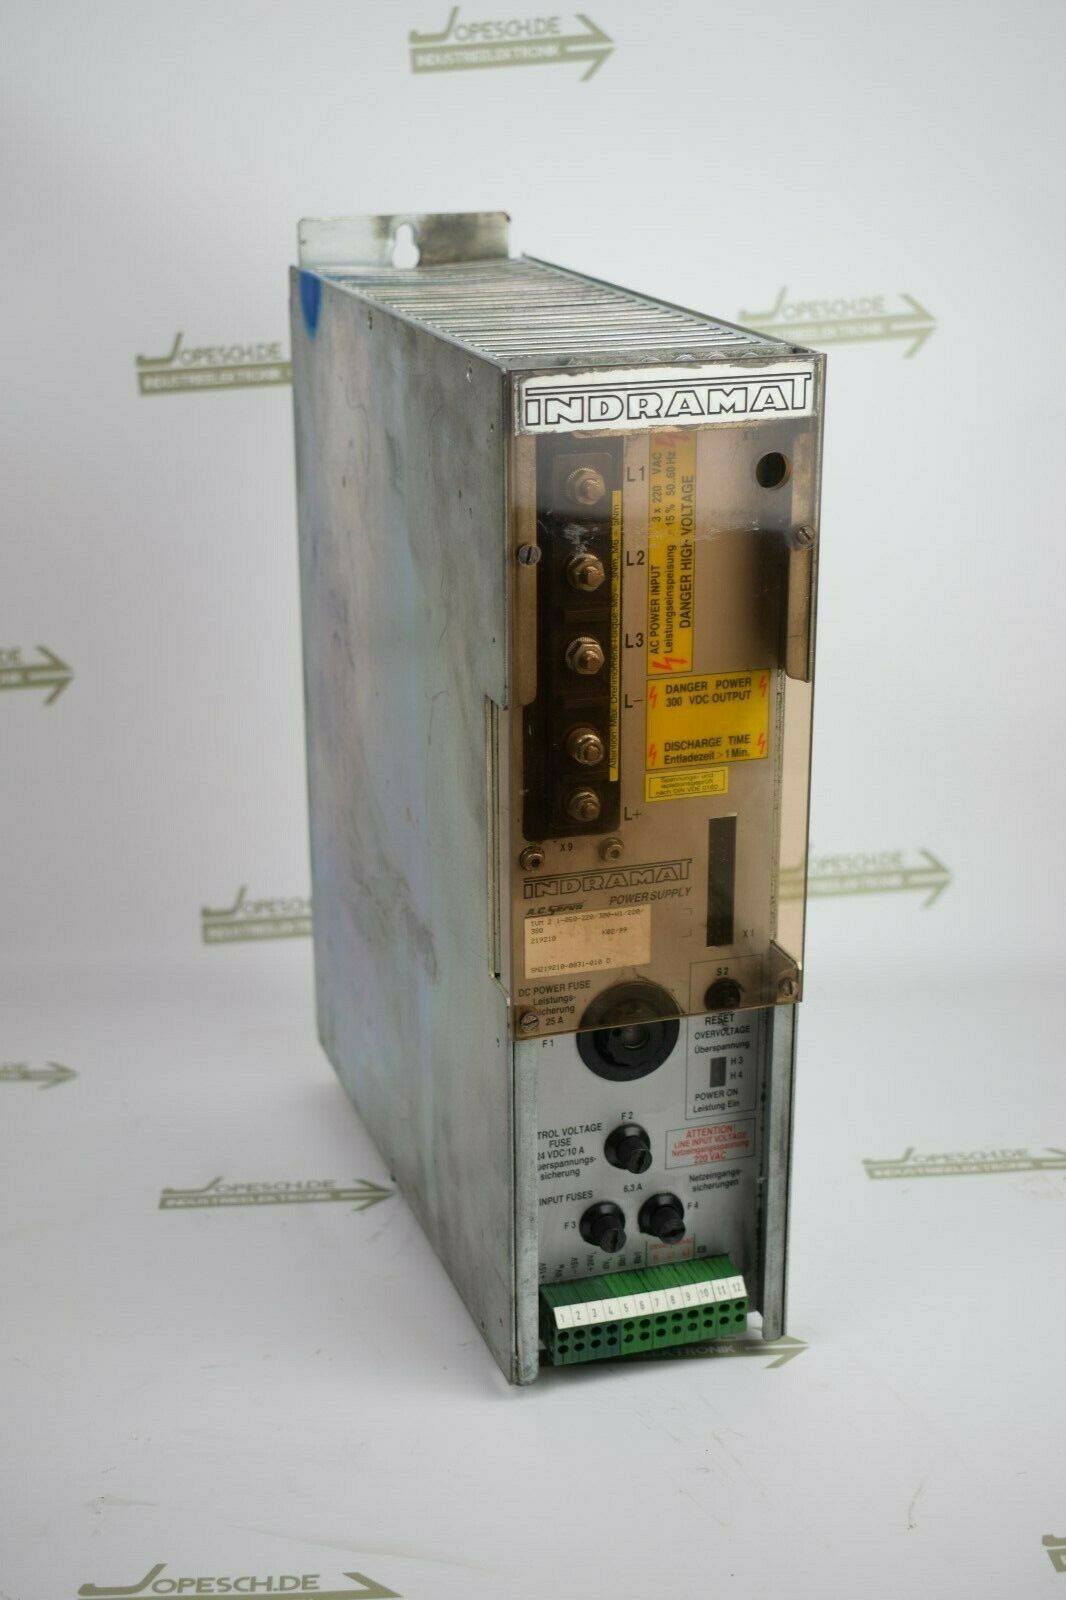 Indramat A.C. Servo Power Supply TVM 2.1-050-220/300-W1/220/380